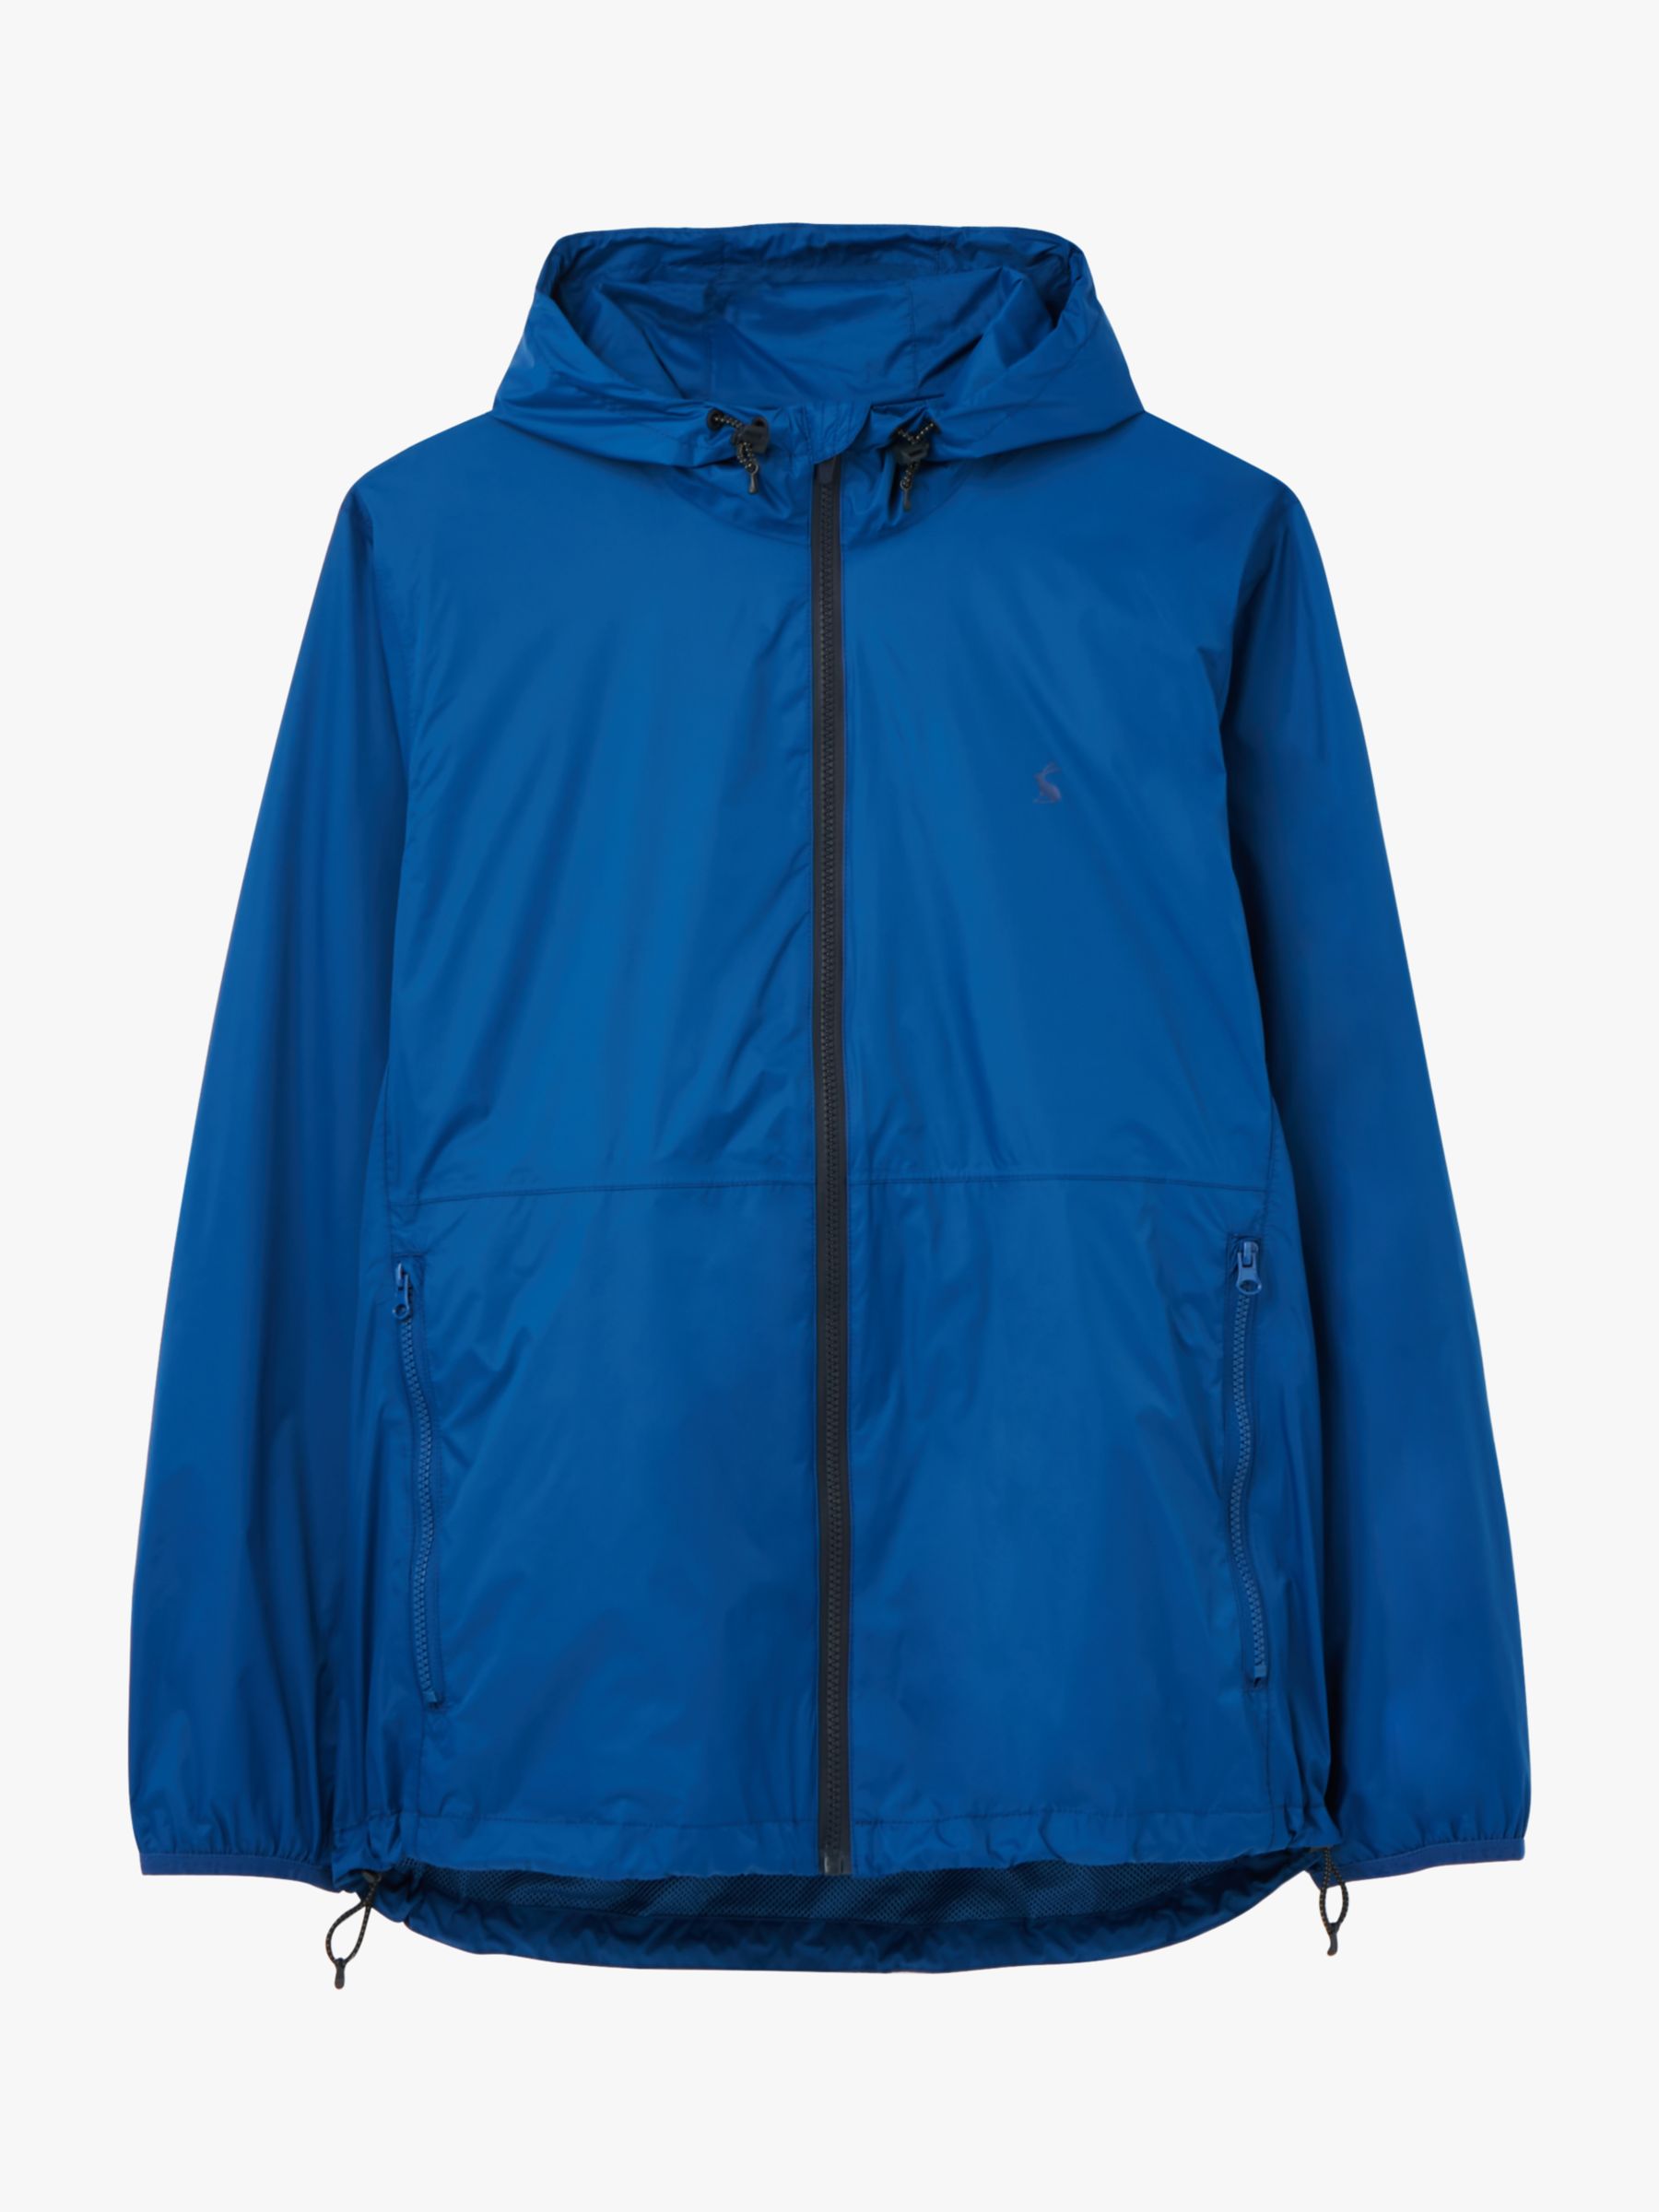 Joules Arlow Lightweight Waterproof Jacket, Blue, S